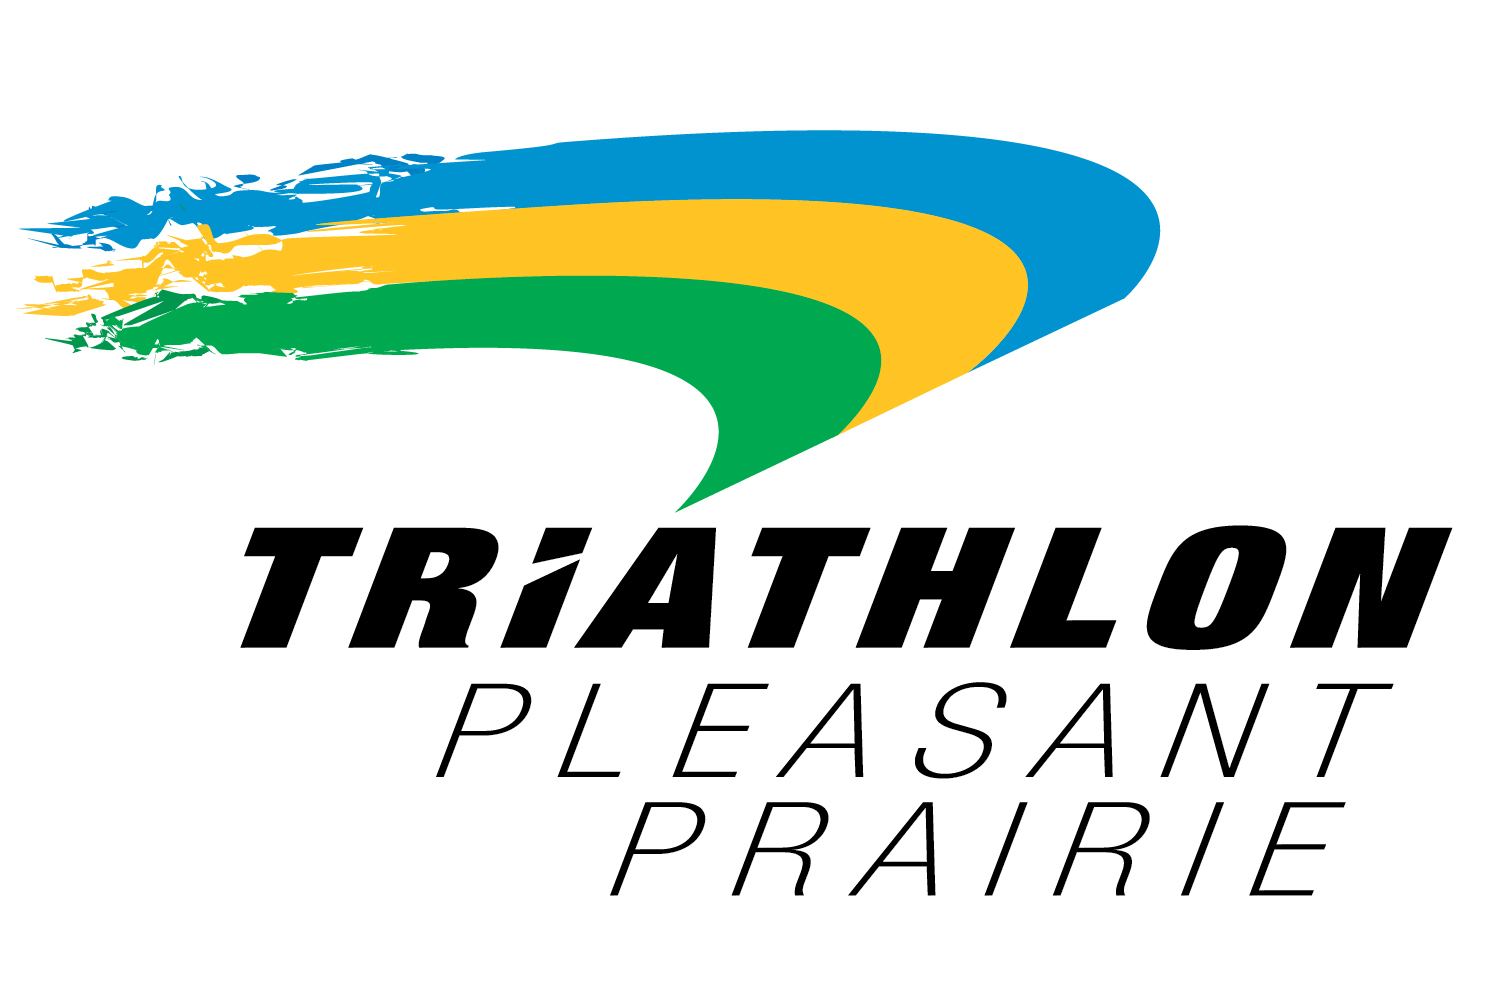 Pleasant Prairie Triathlon logo on RaceRaves